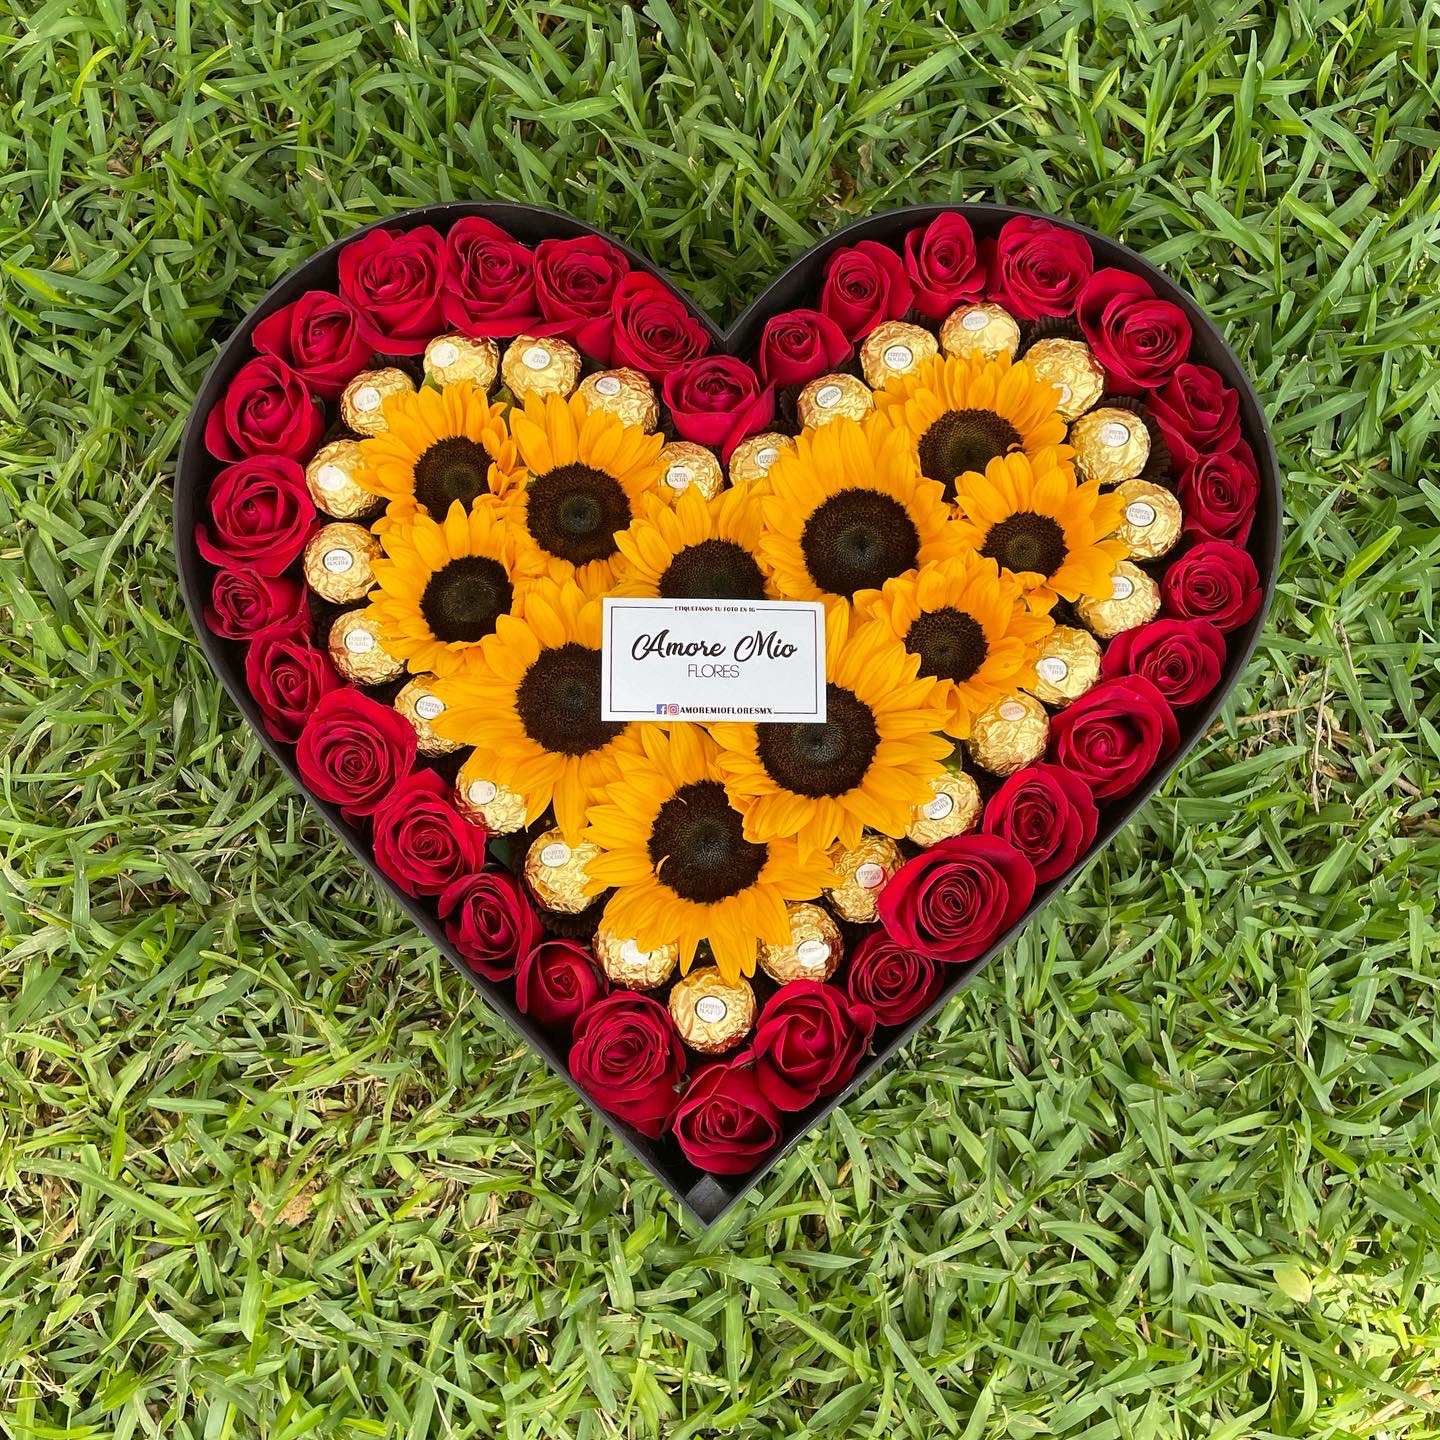 Caja Corazón Ferrero - Floristeria Manantial De Flores